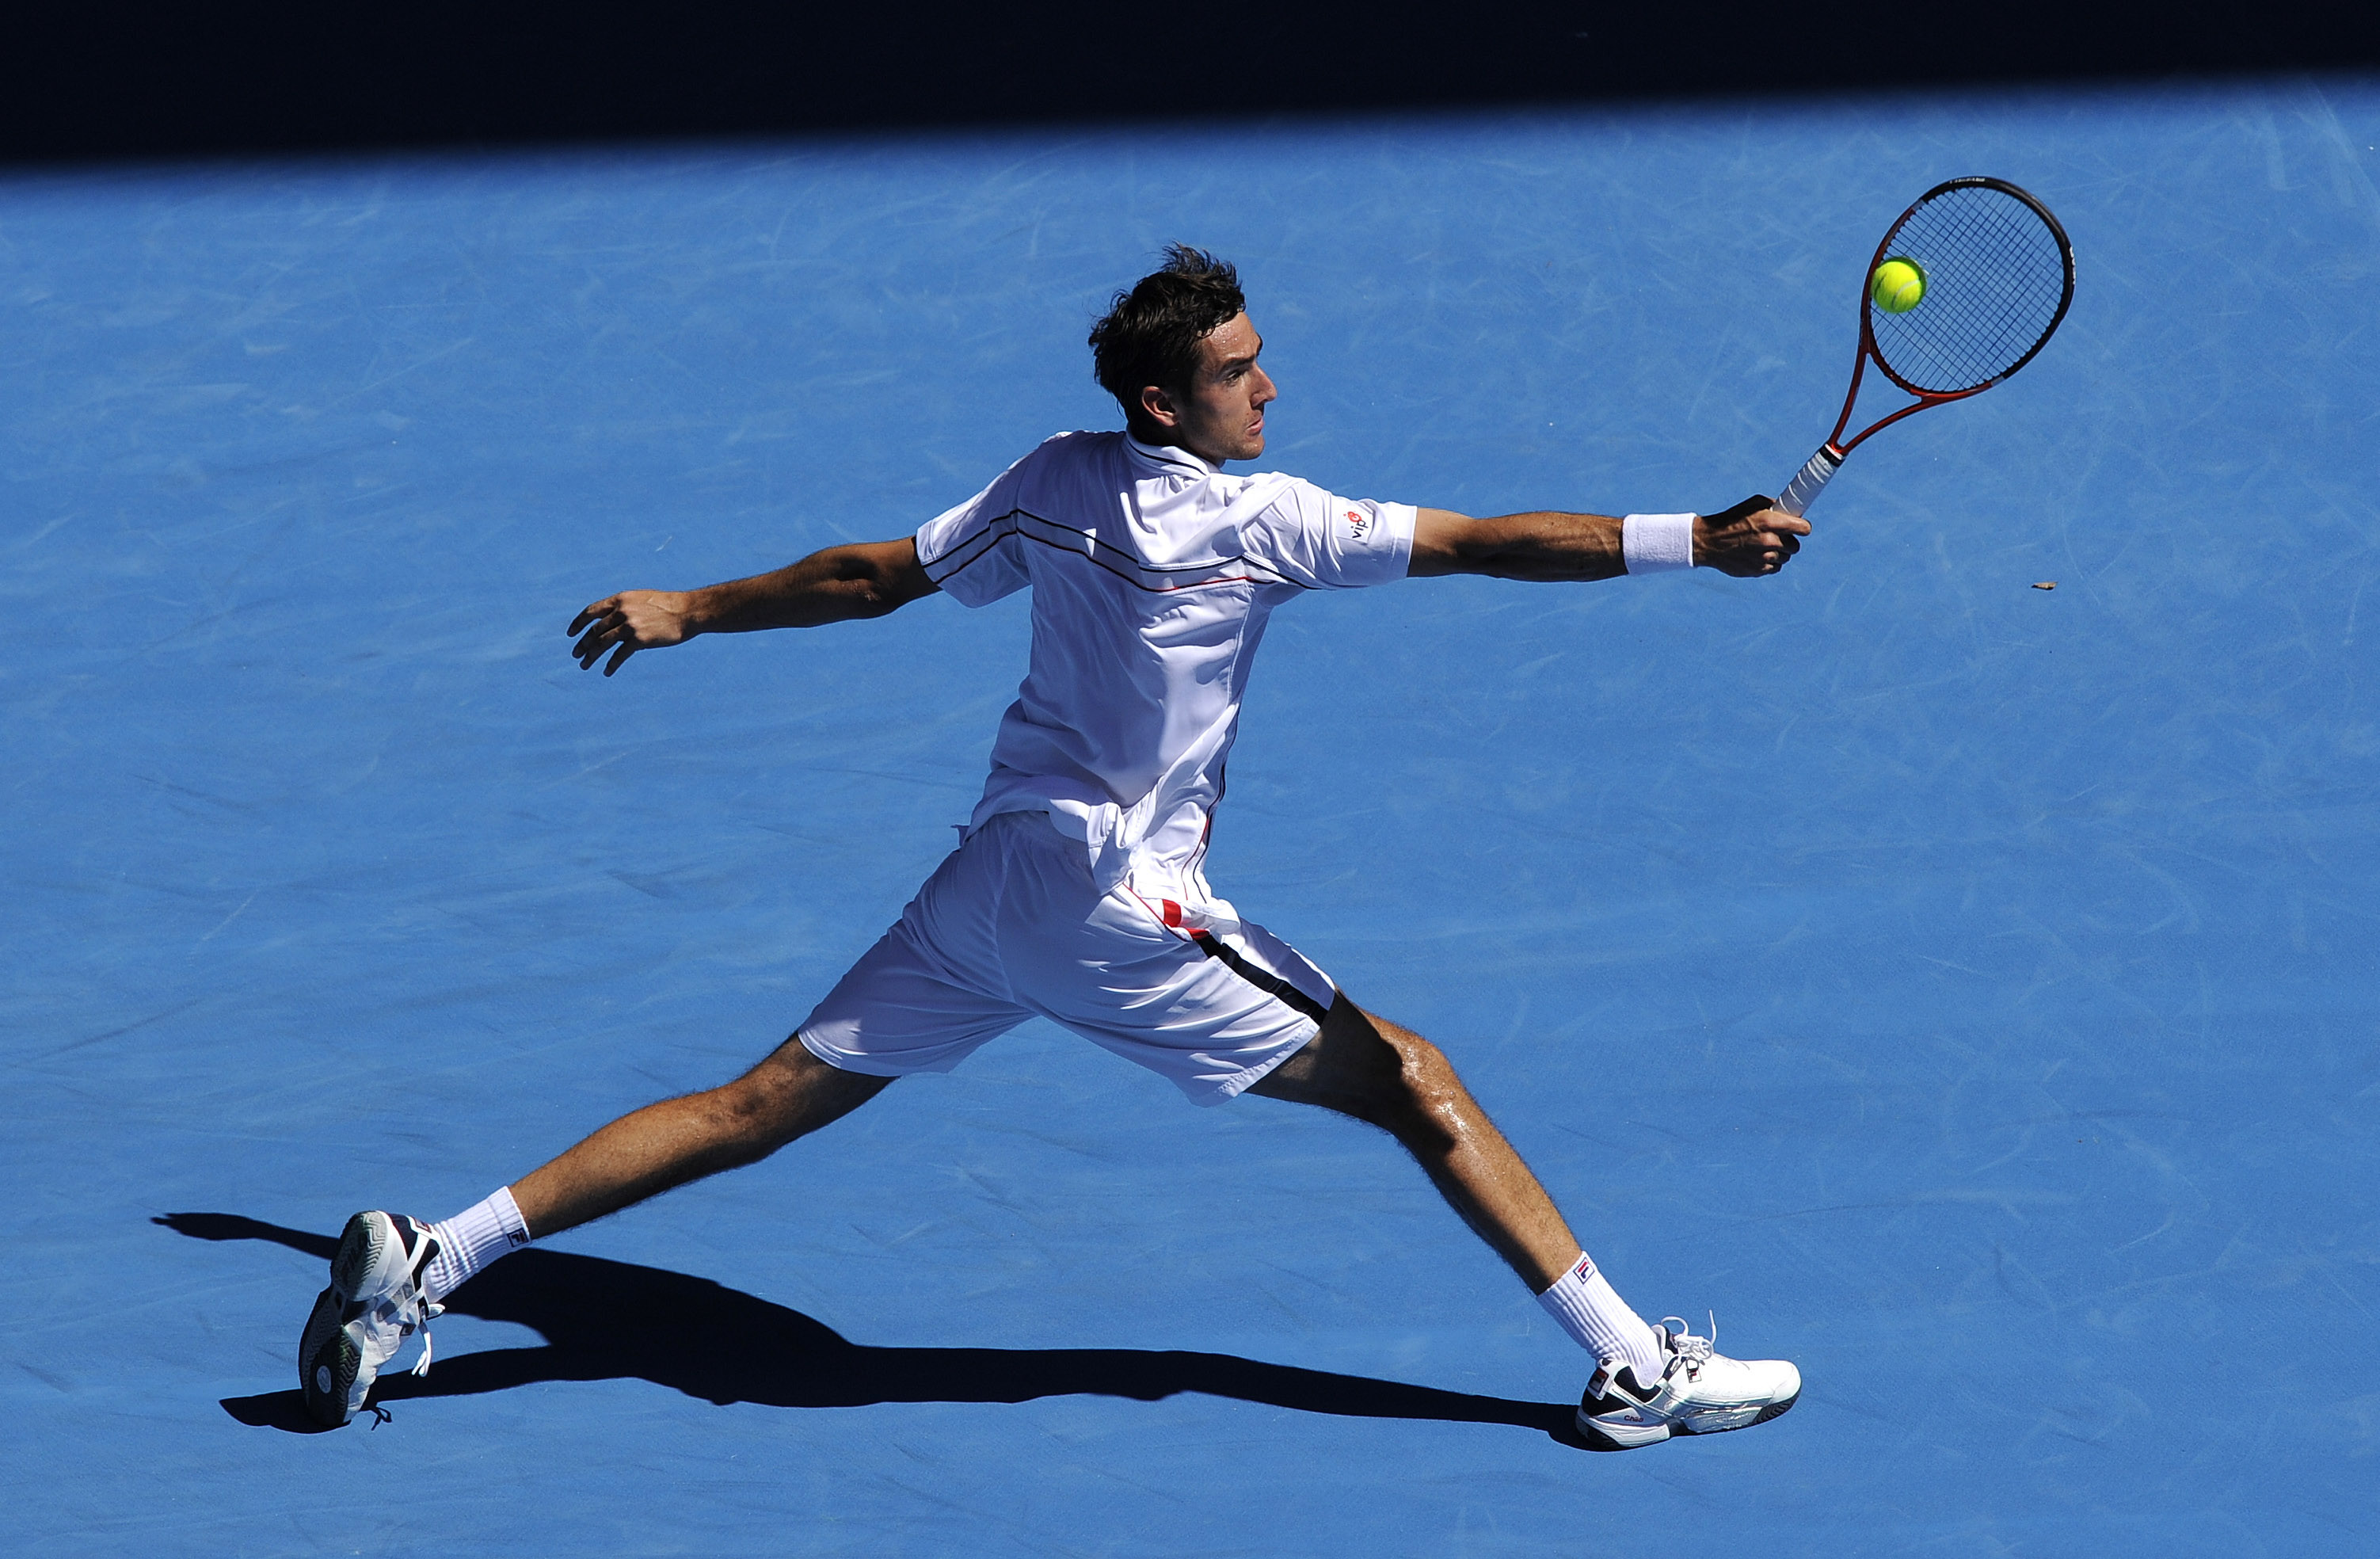 Tennis, Roger Federer, Australian Open, Andy Murray, Marin Cilic, Kvartsfinal, Juan Martin del Potro, Andy Roddick